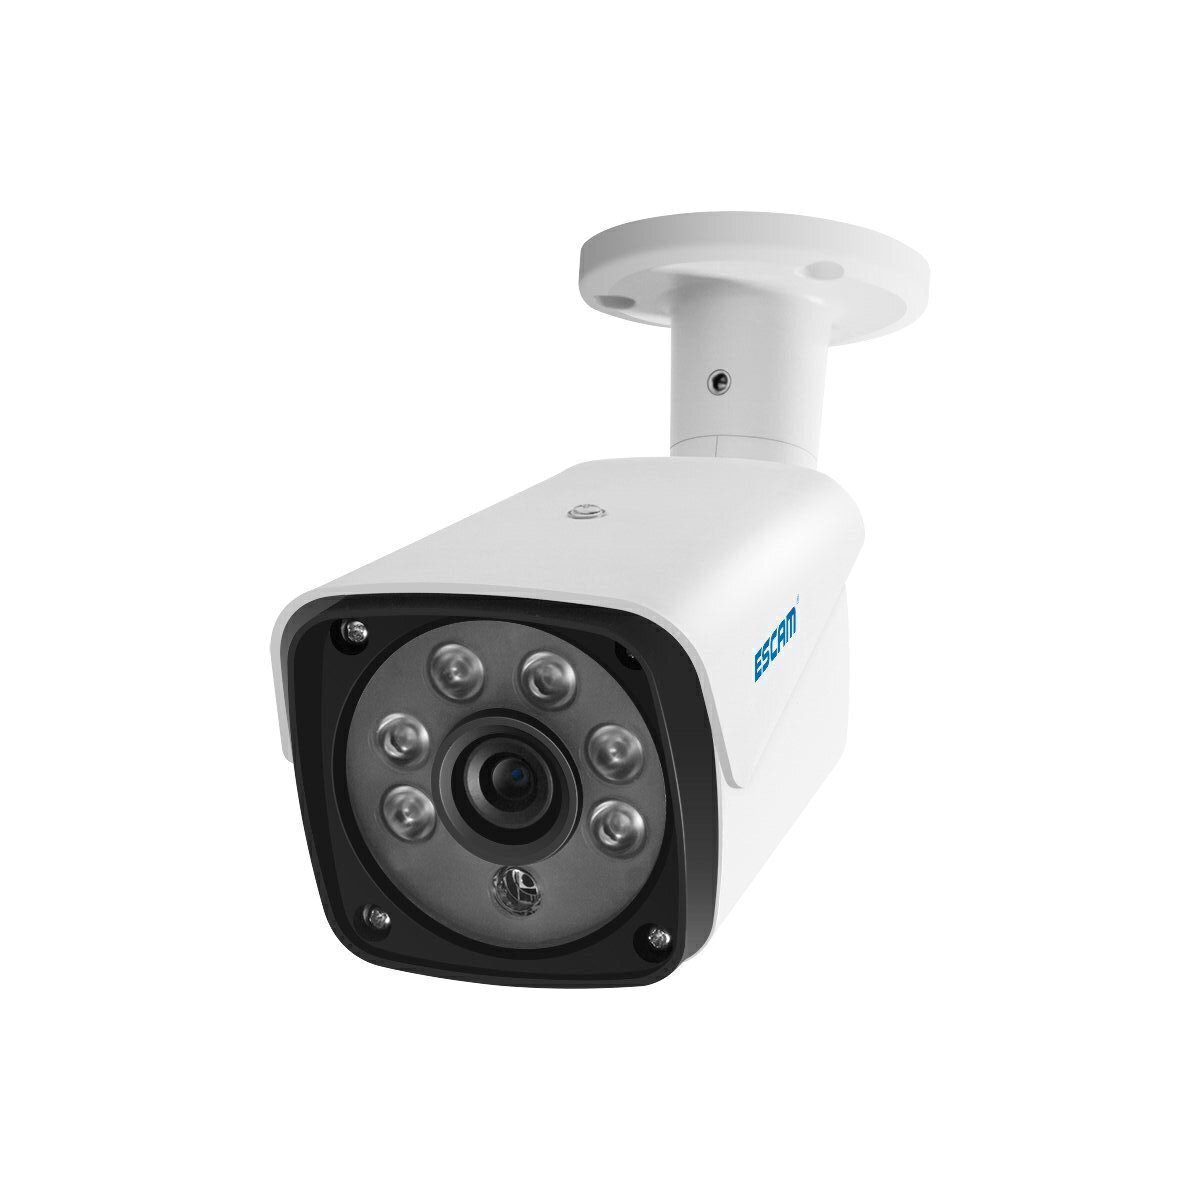 ESCAM QH002 HD 1080P IP Camera ONVIF H.265 P2P Outdoor Waterproof IR Bullet with Smart Analysis Function Surveillance Security Camera 35